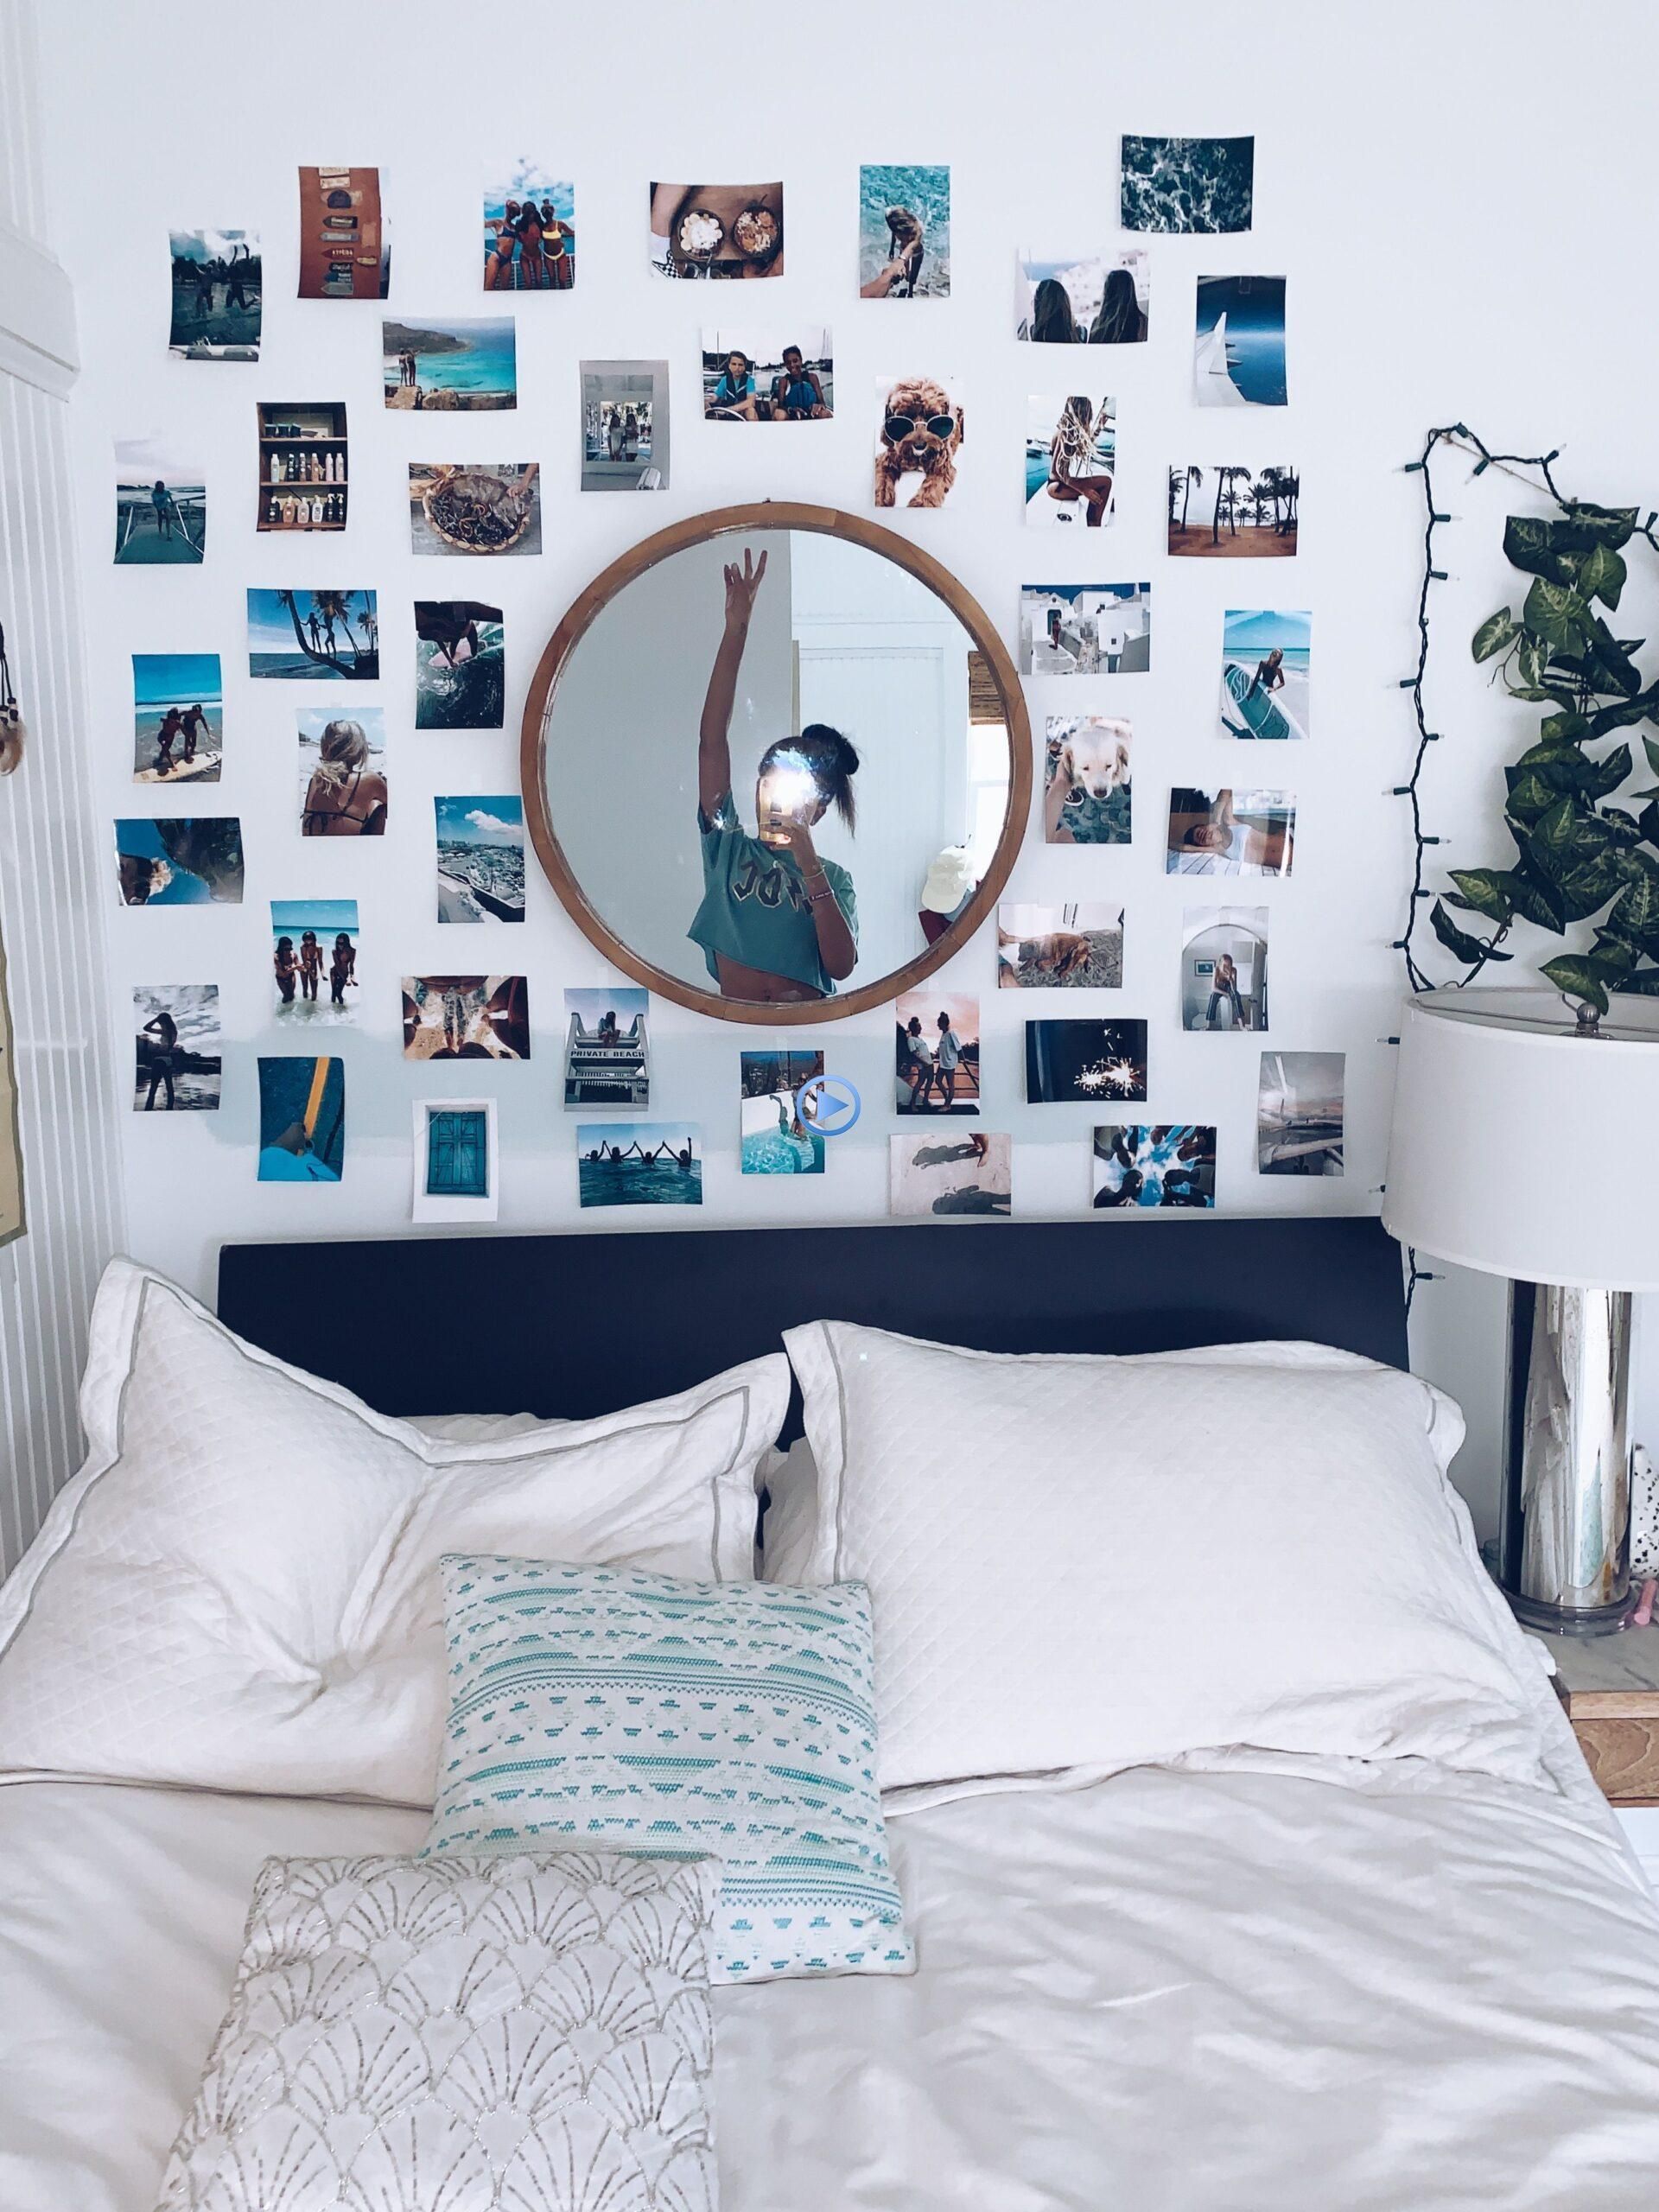 Fotky nápady Tumblr pokoje přes postel Tumblr